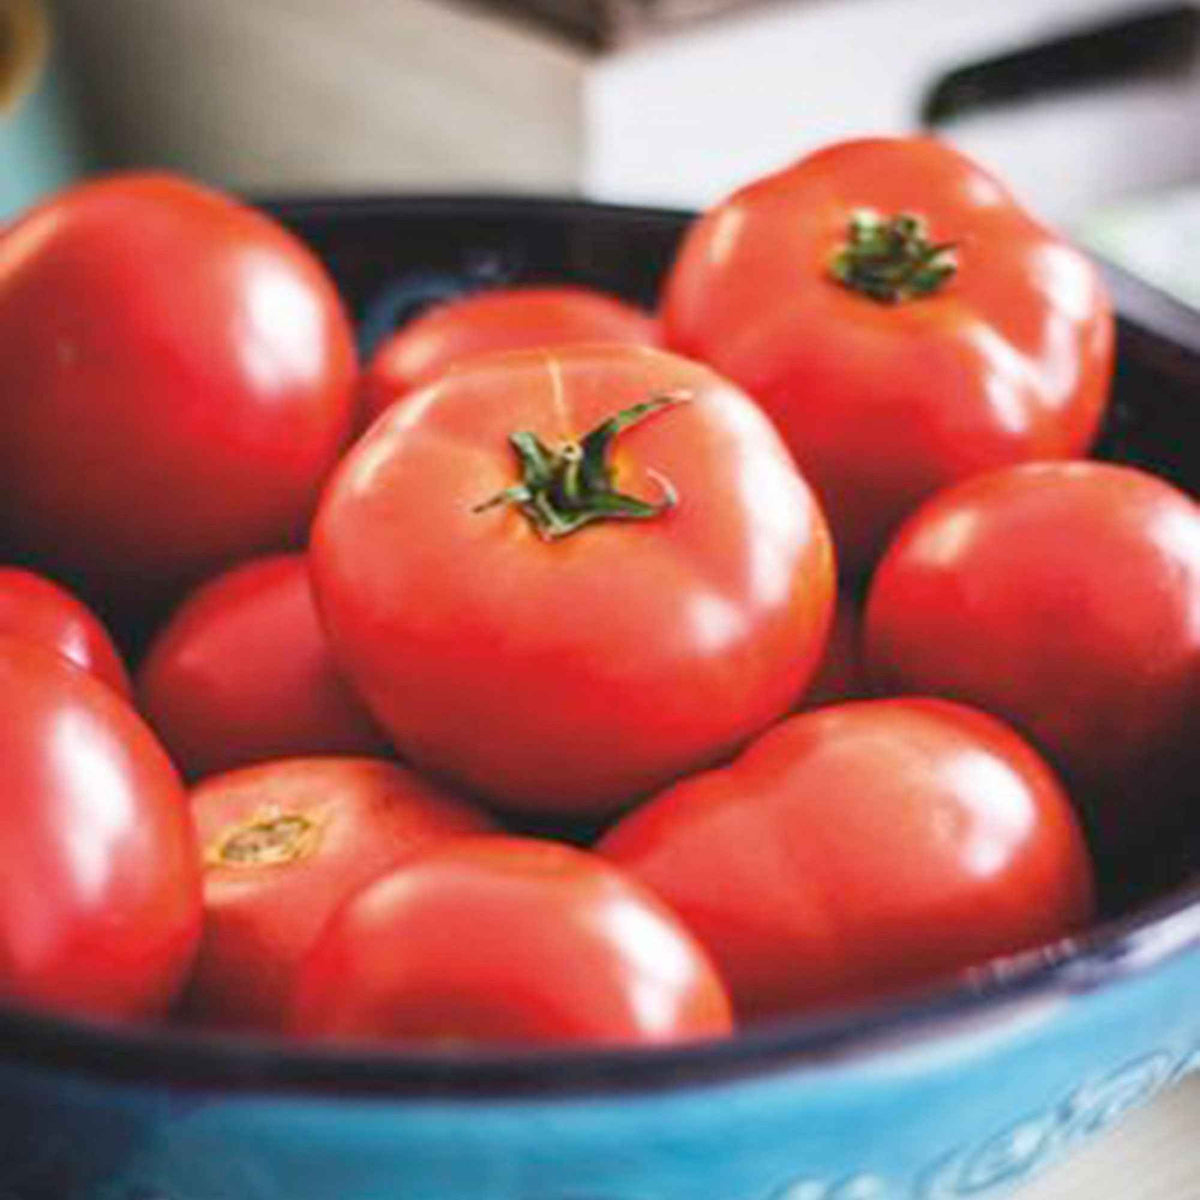 Tomate Moneymaker - Solanum lycopersicum moneymaker - Potager